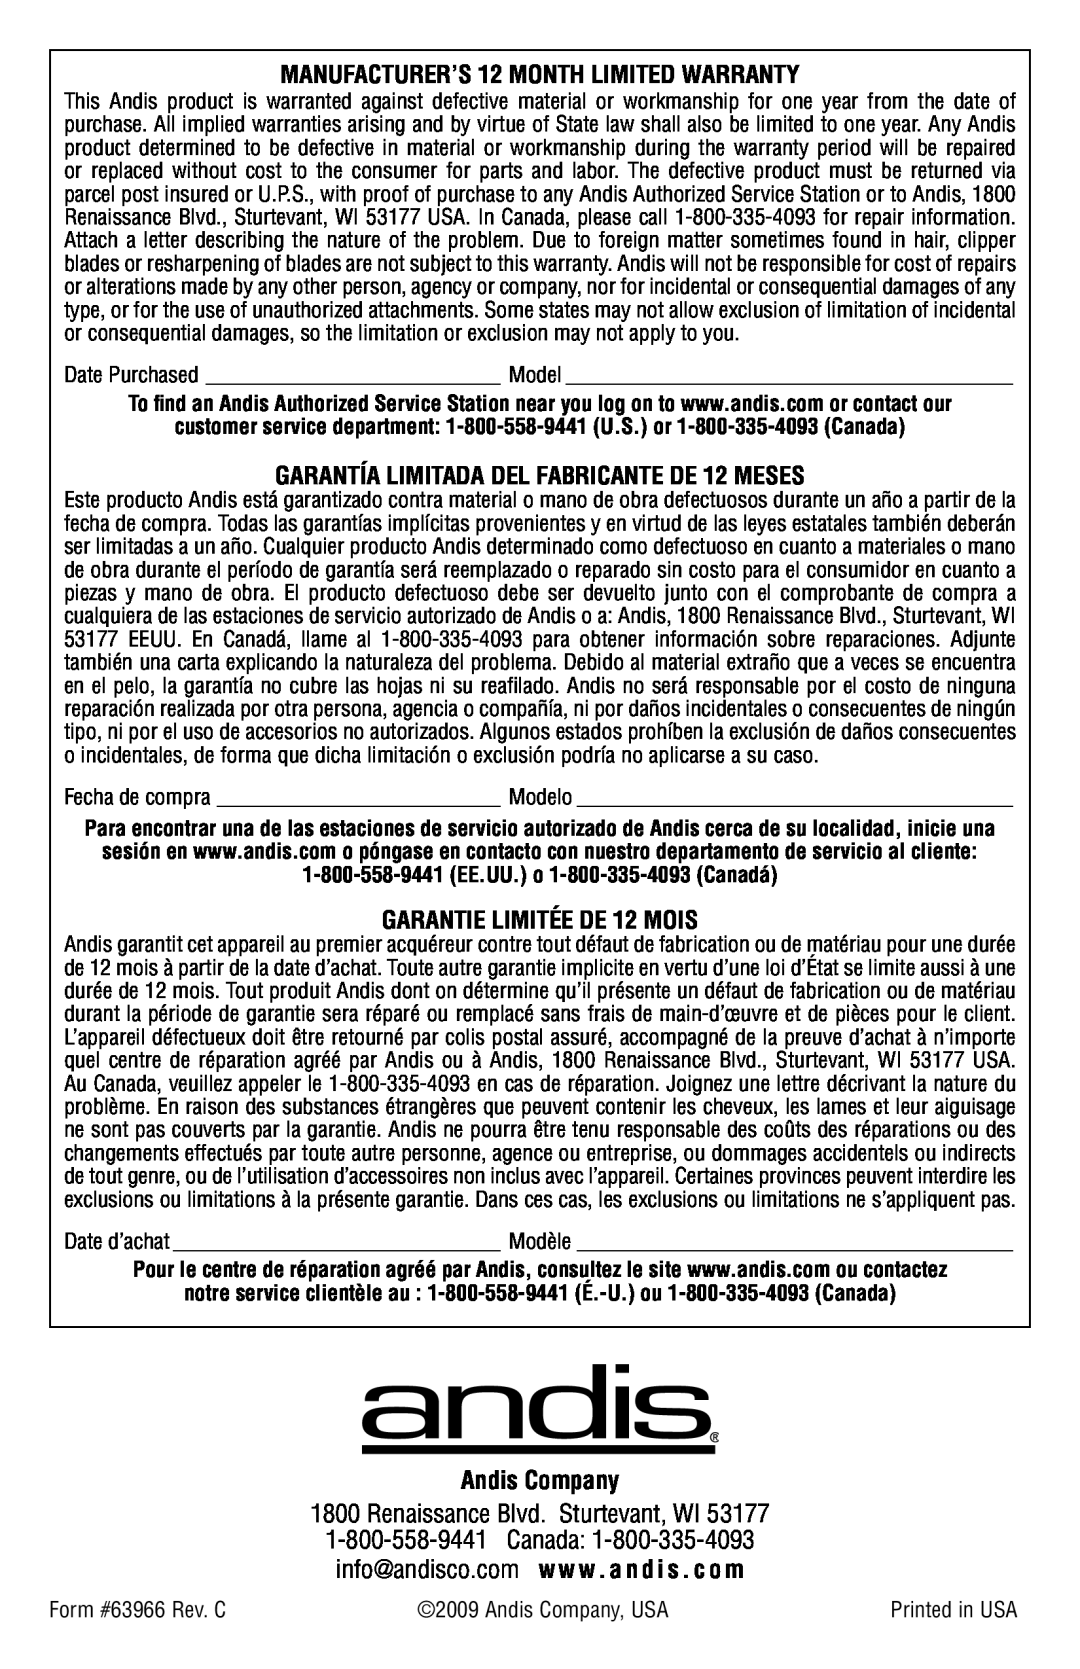 Andis Company AGRC Manufacturer’s 12 Month Limited Warranty, GARANTÍA LIMITADA DEL FABRICANTE DE 12 MESES, Andis Company 